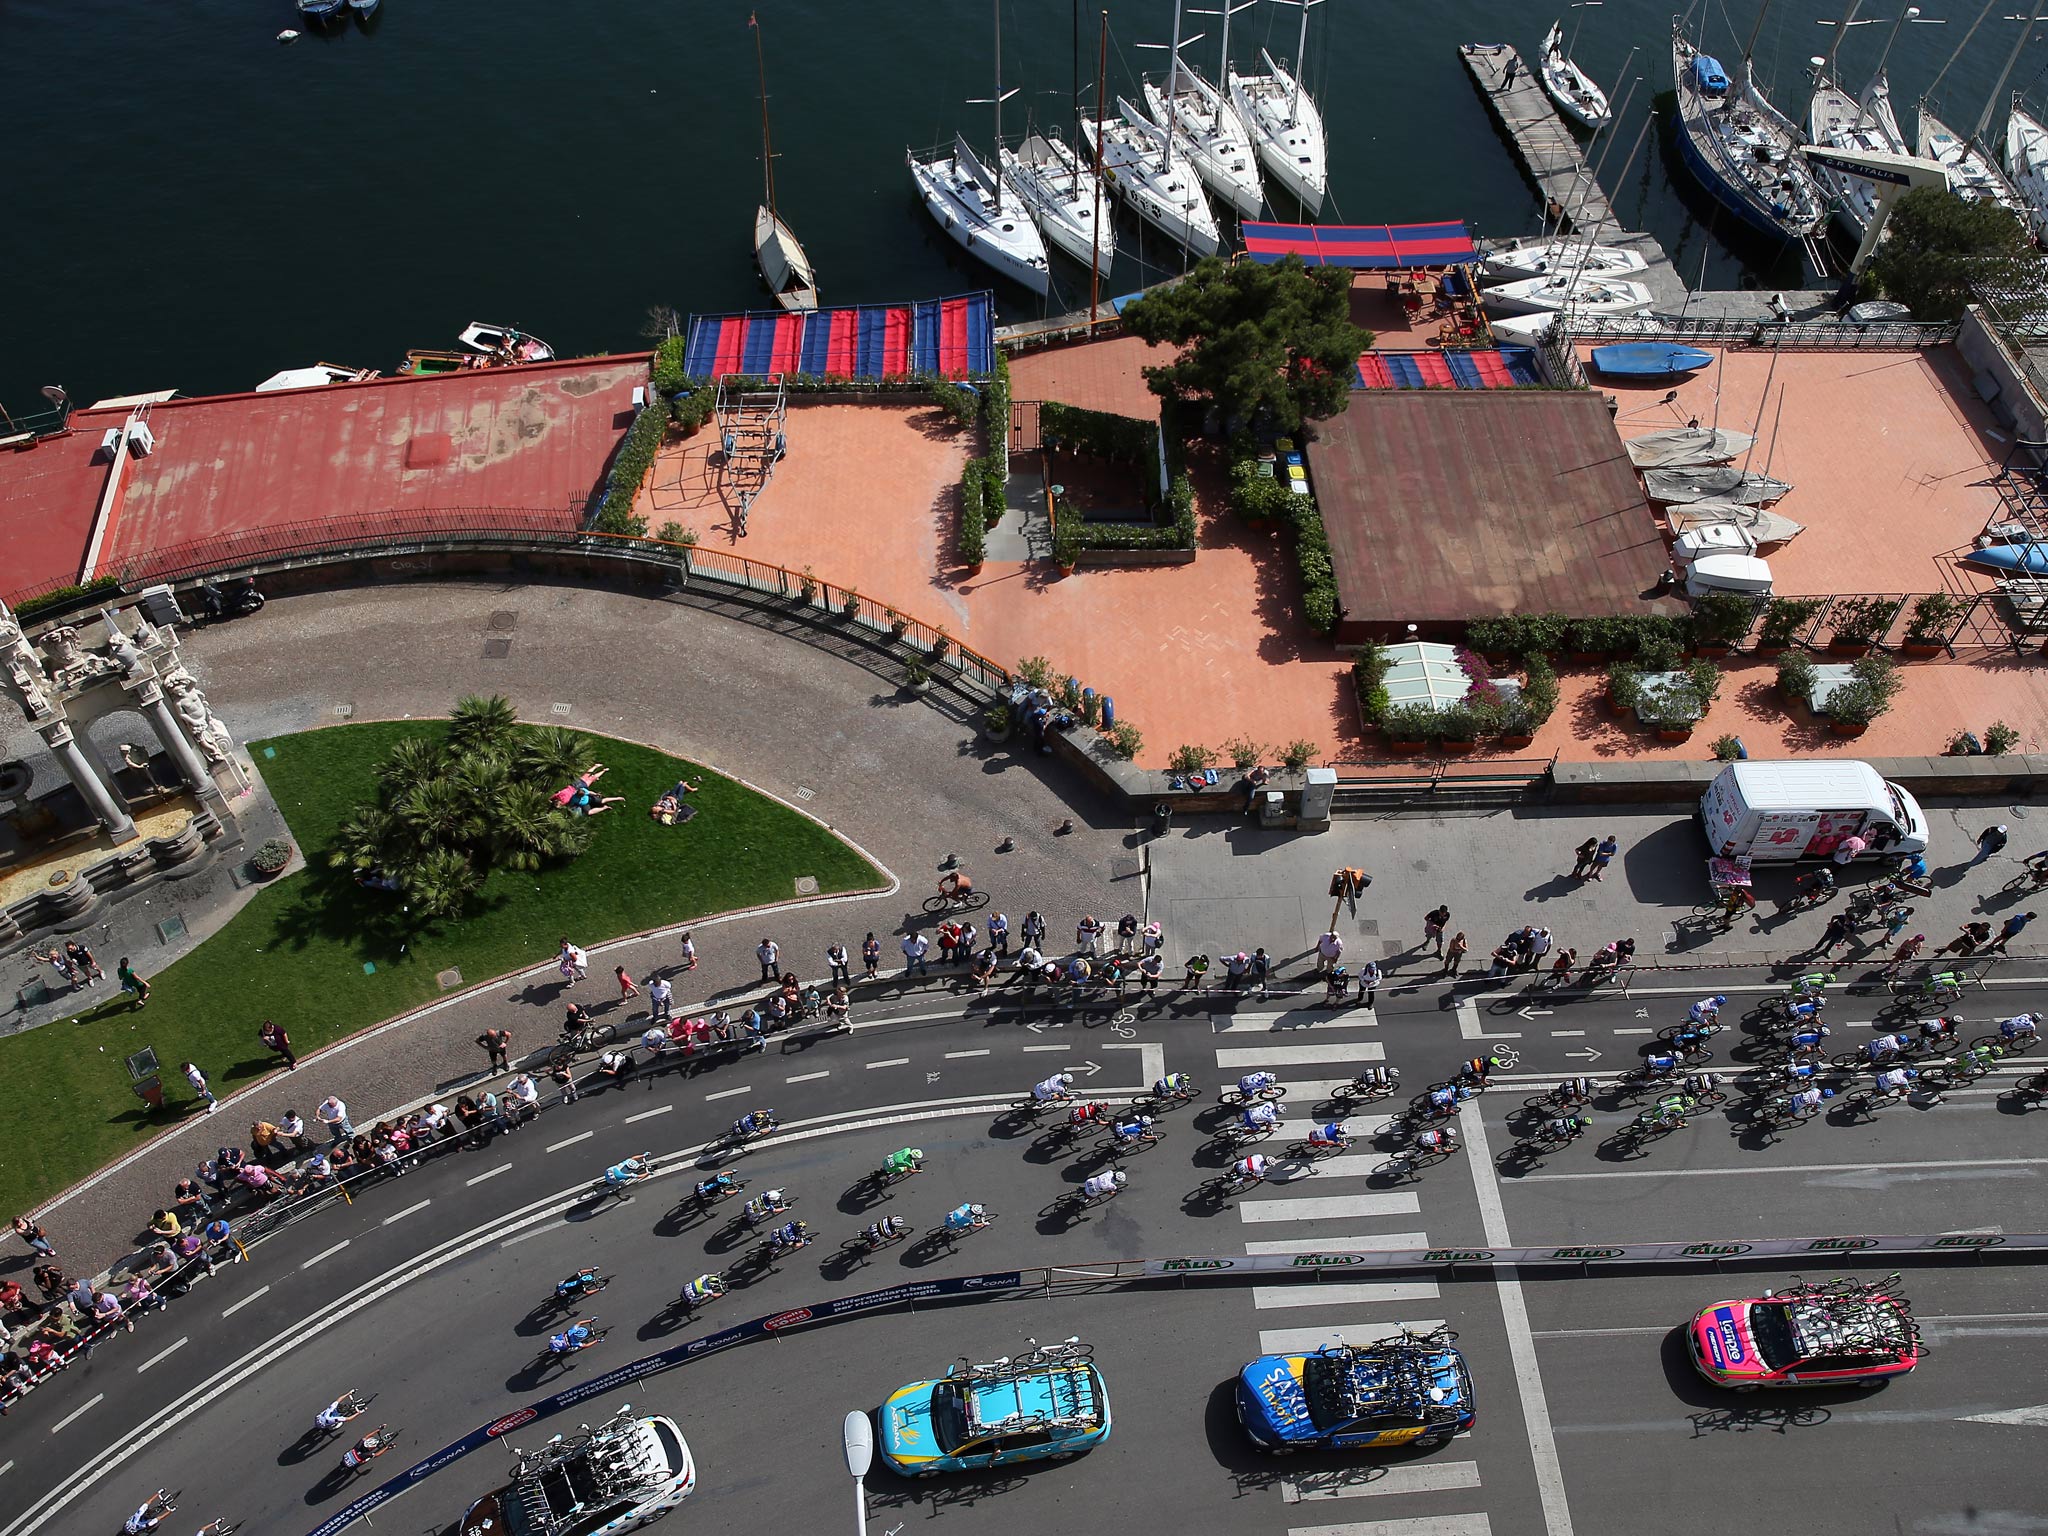 An overhead view of the Giro d'Italia